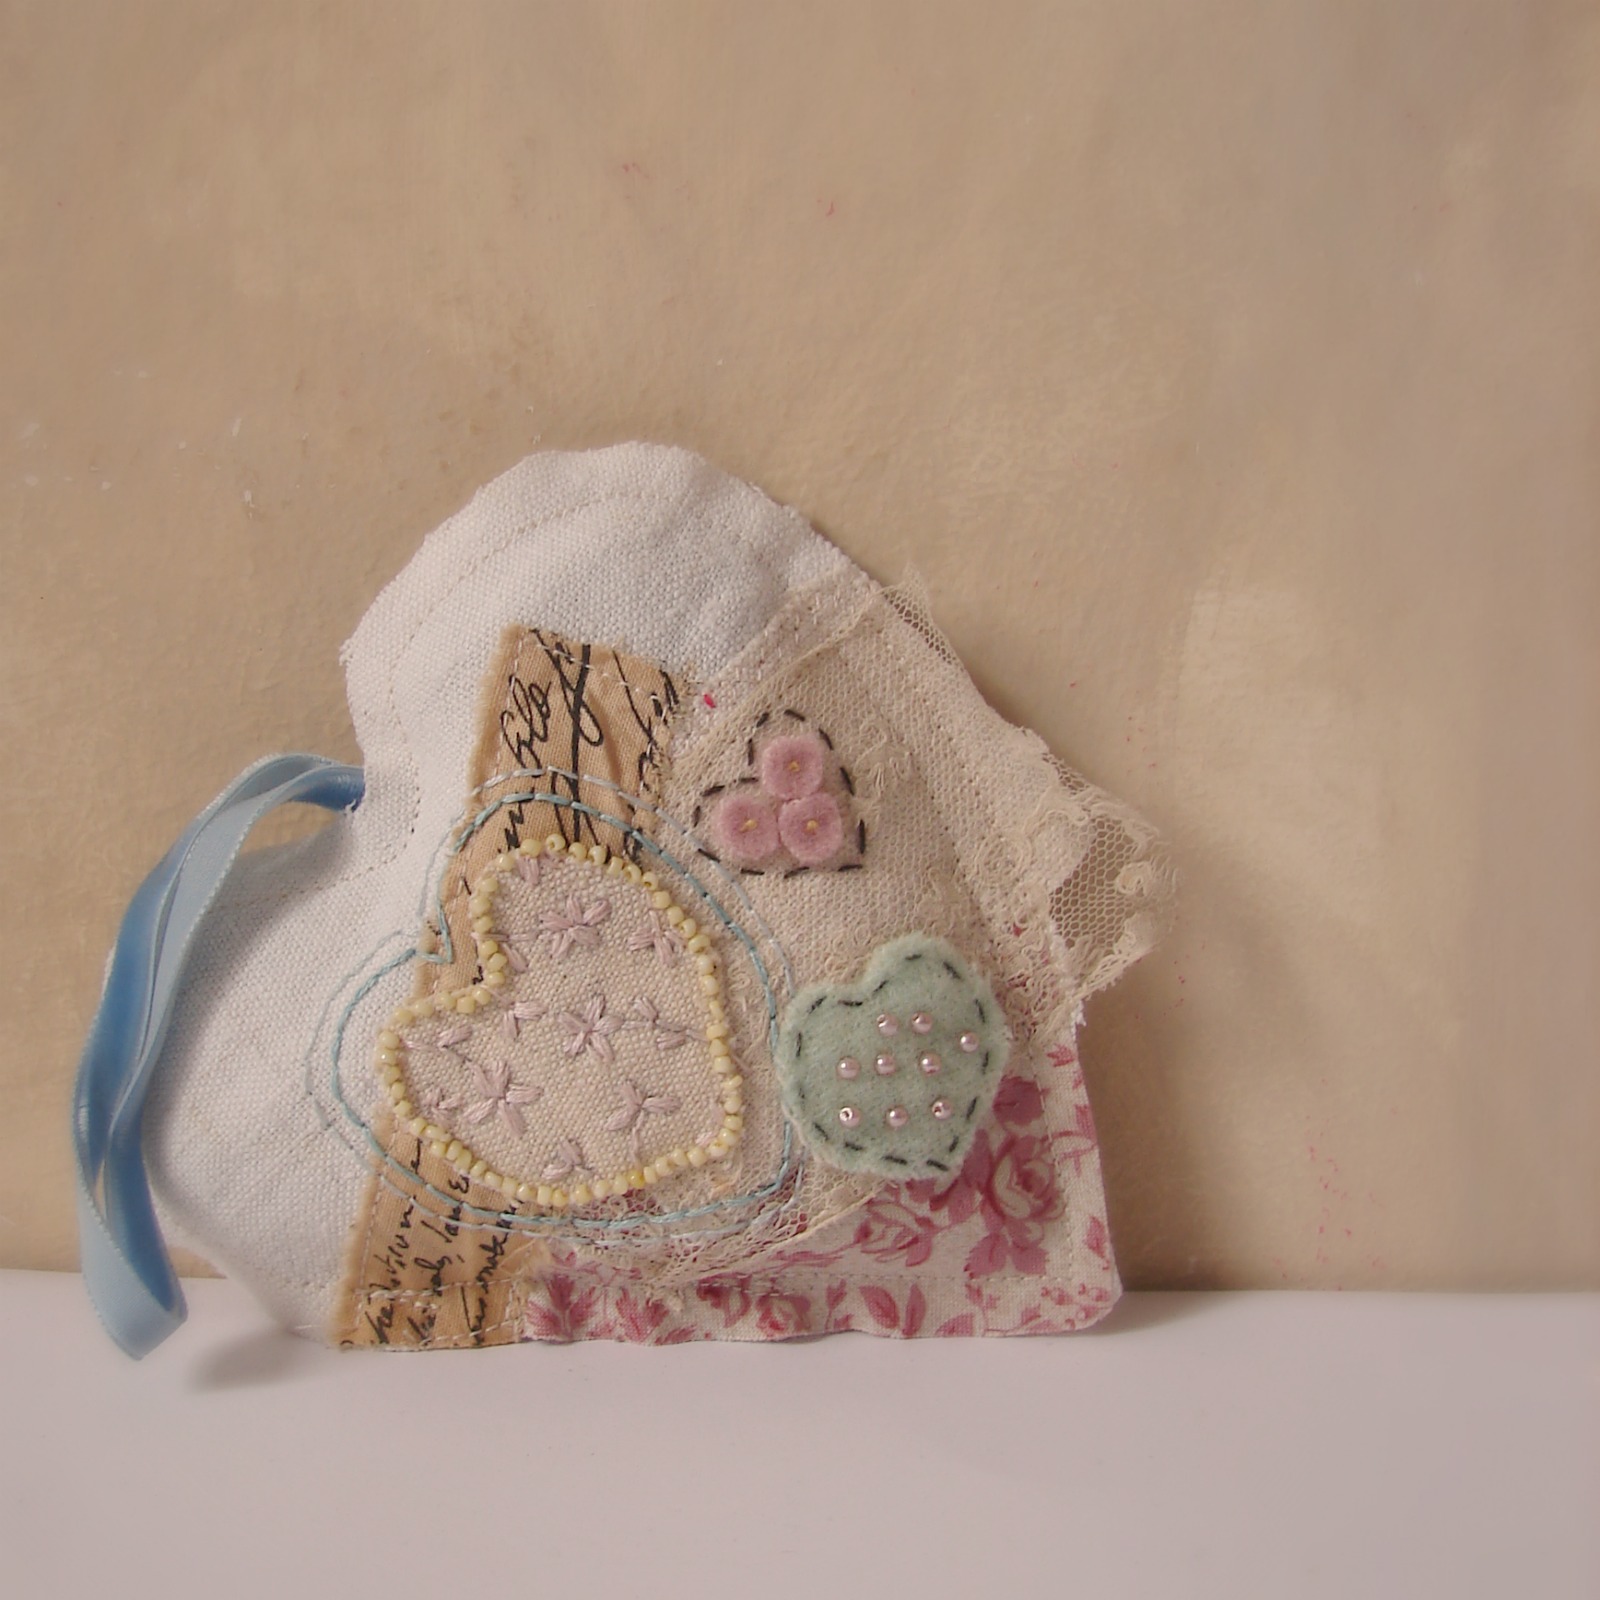 Roxy Creations: Heart lavender sachets